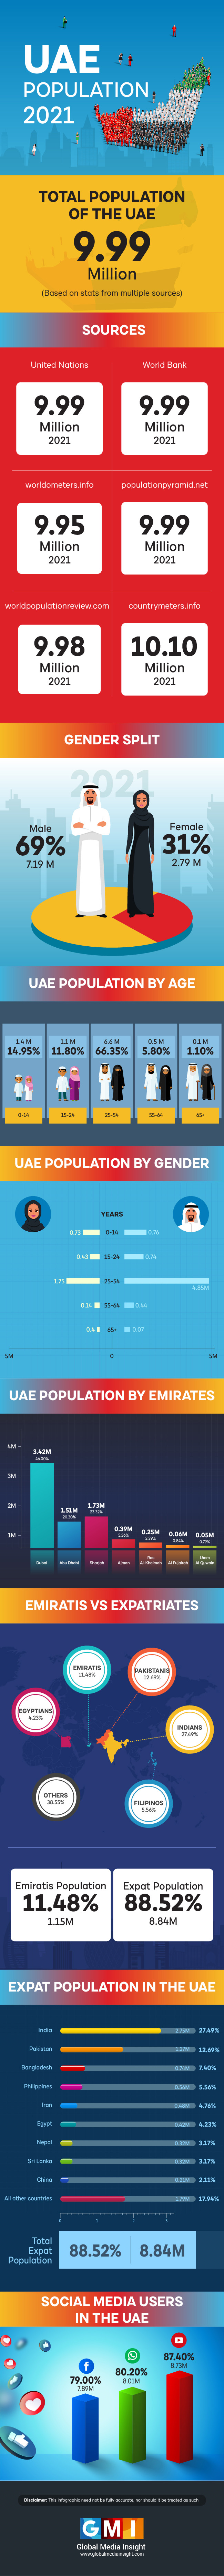 UAE Population 2021 infographic